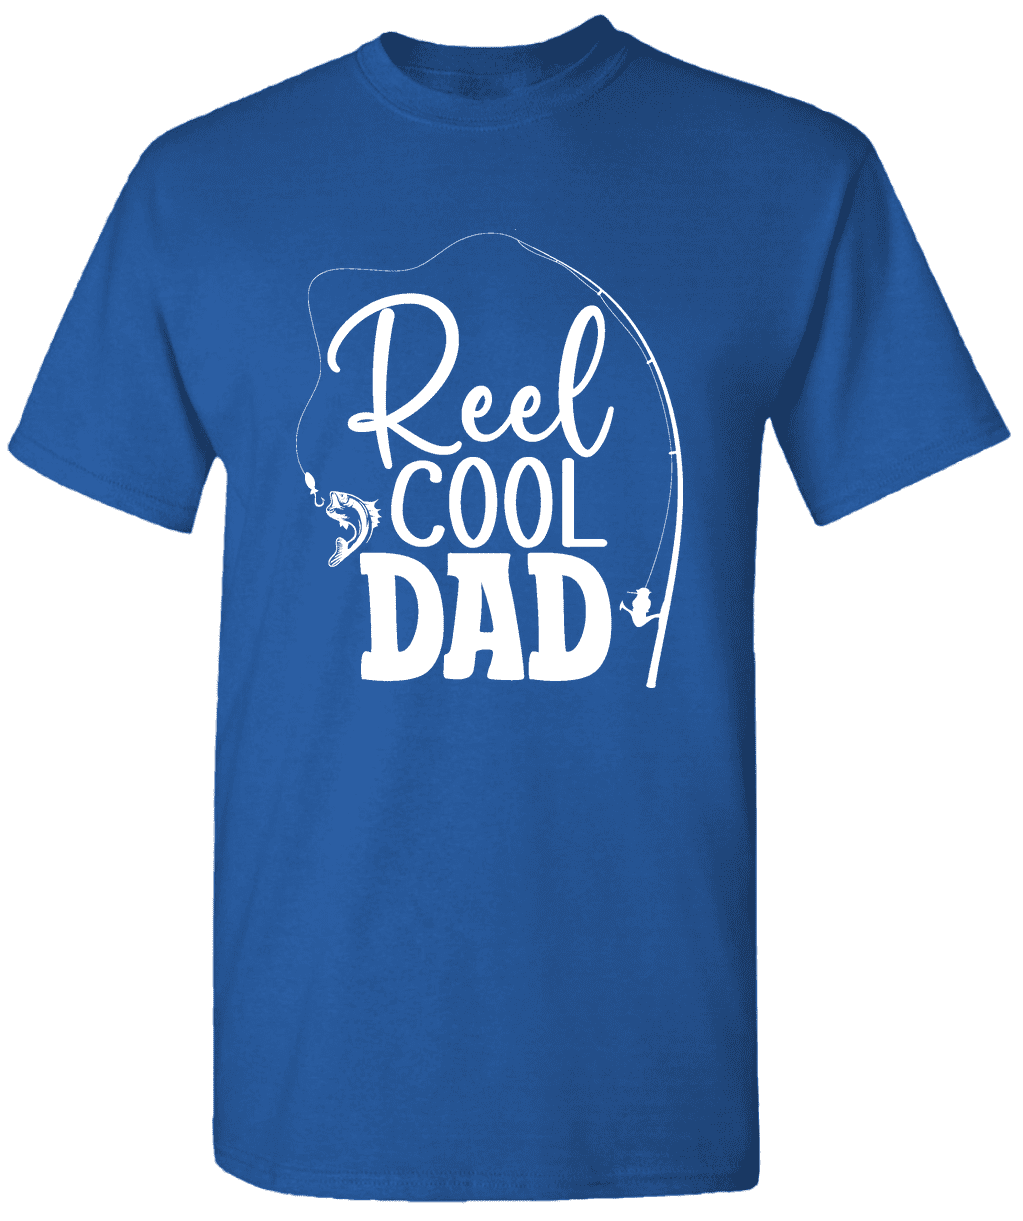 Reel Cool Dad - Fishing T-Shirt Novelty Fishing Shirt